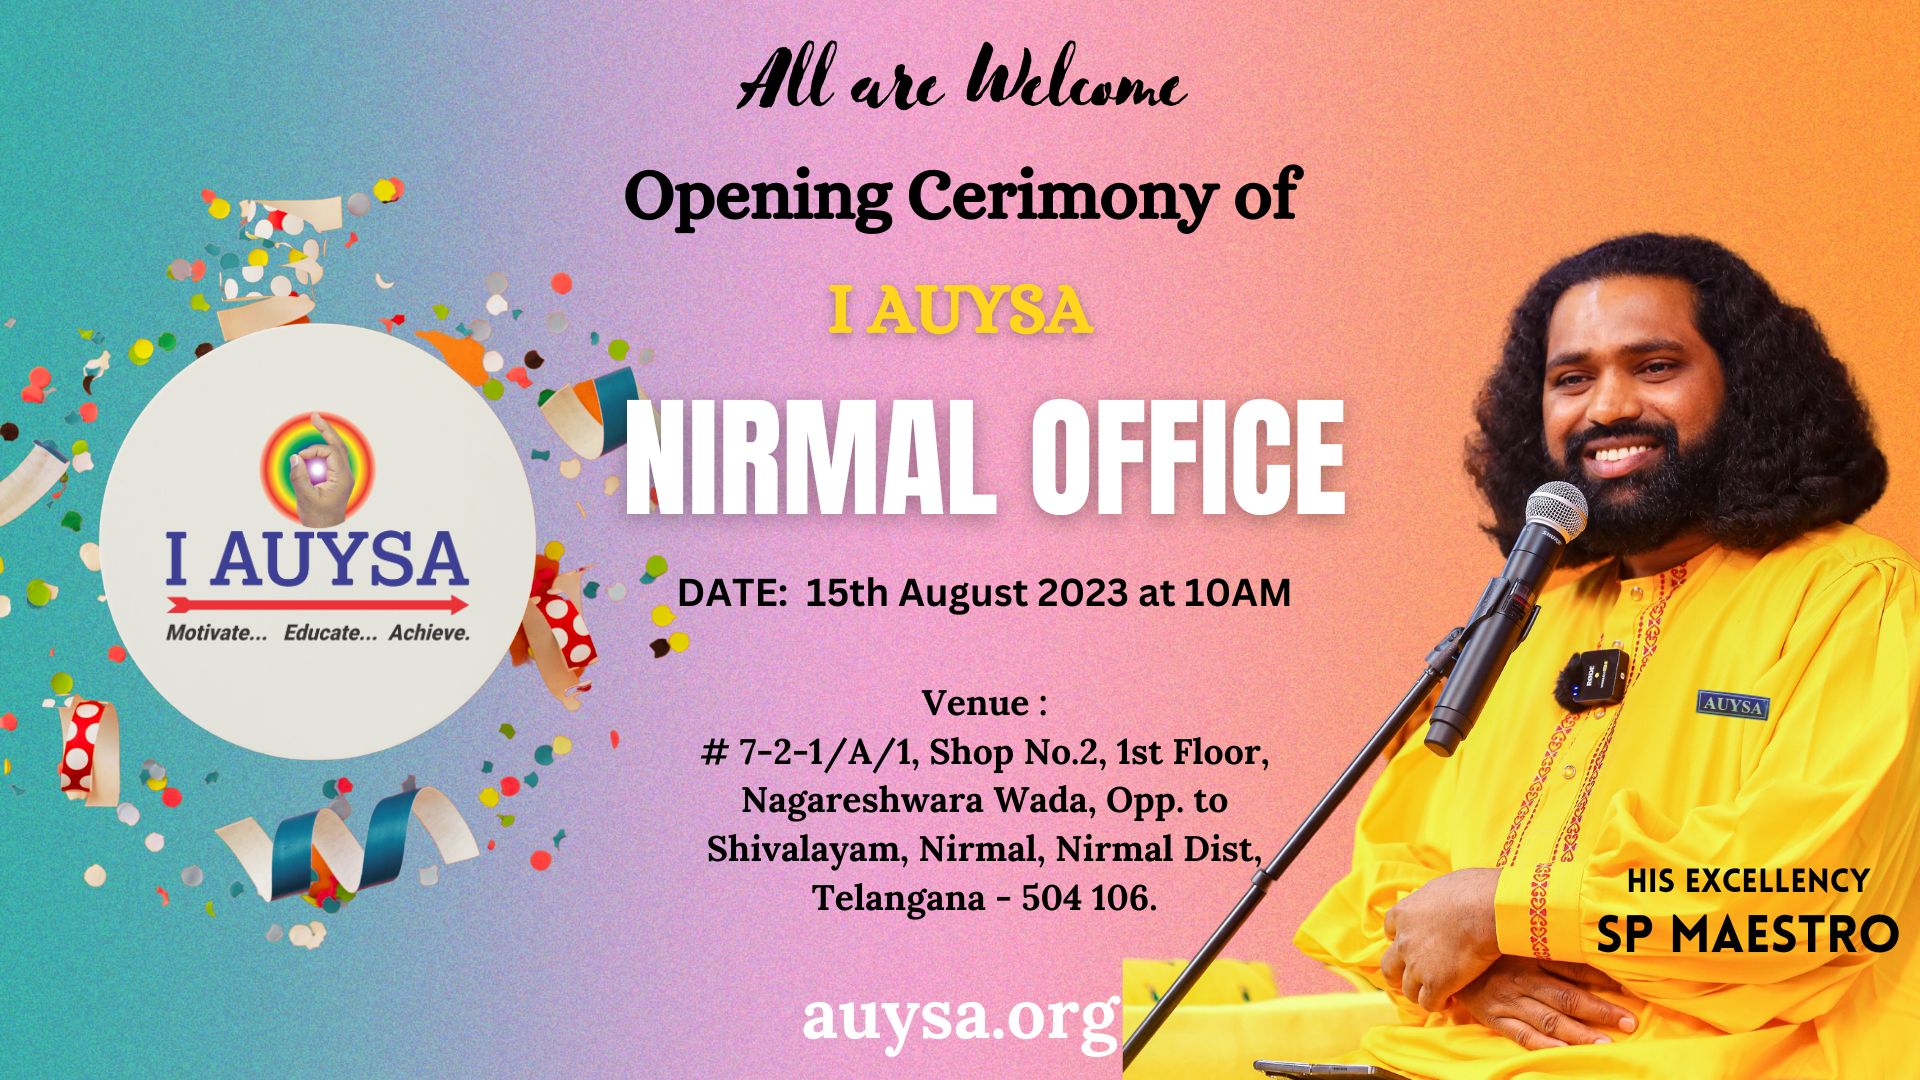 I AUYSA Nirmal Office Opening Ceremony